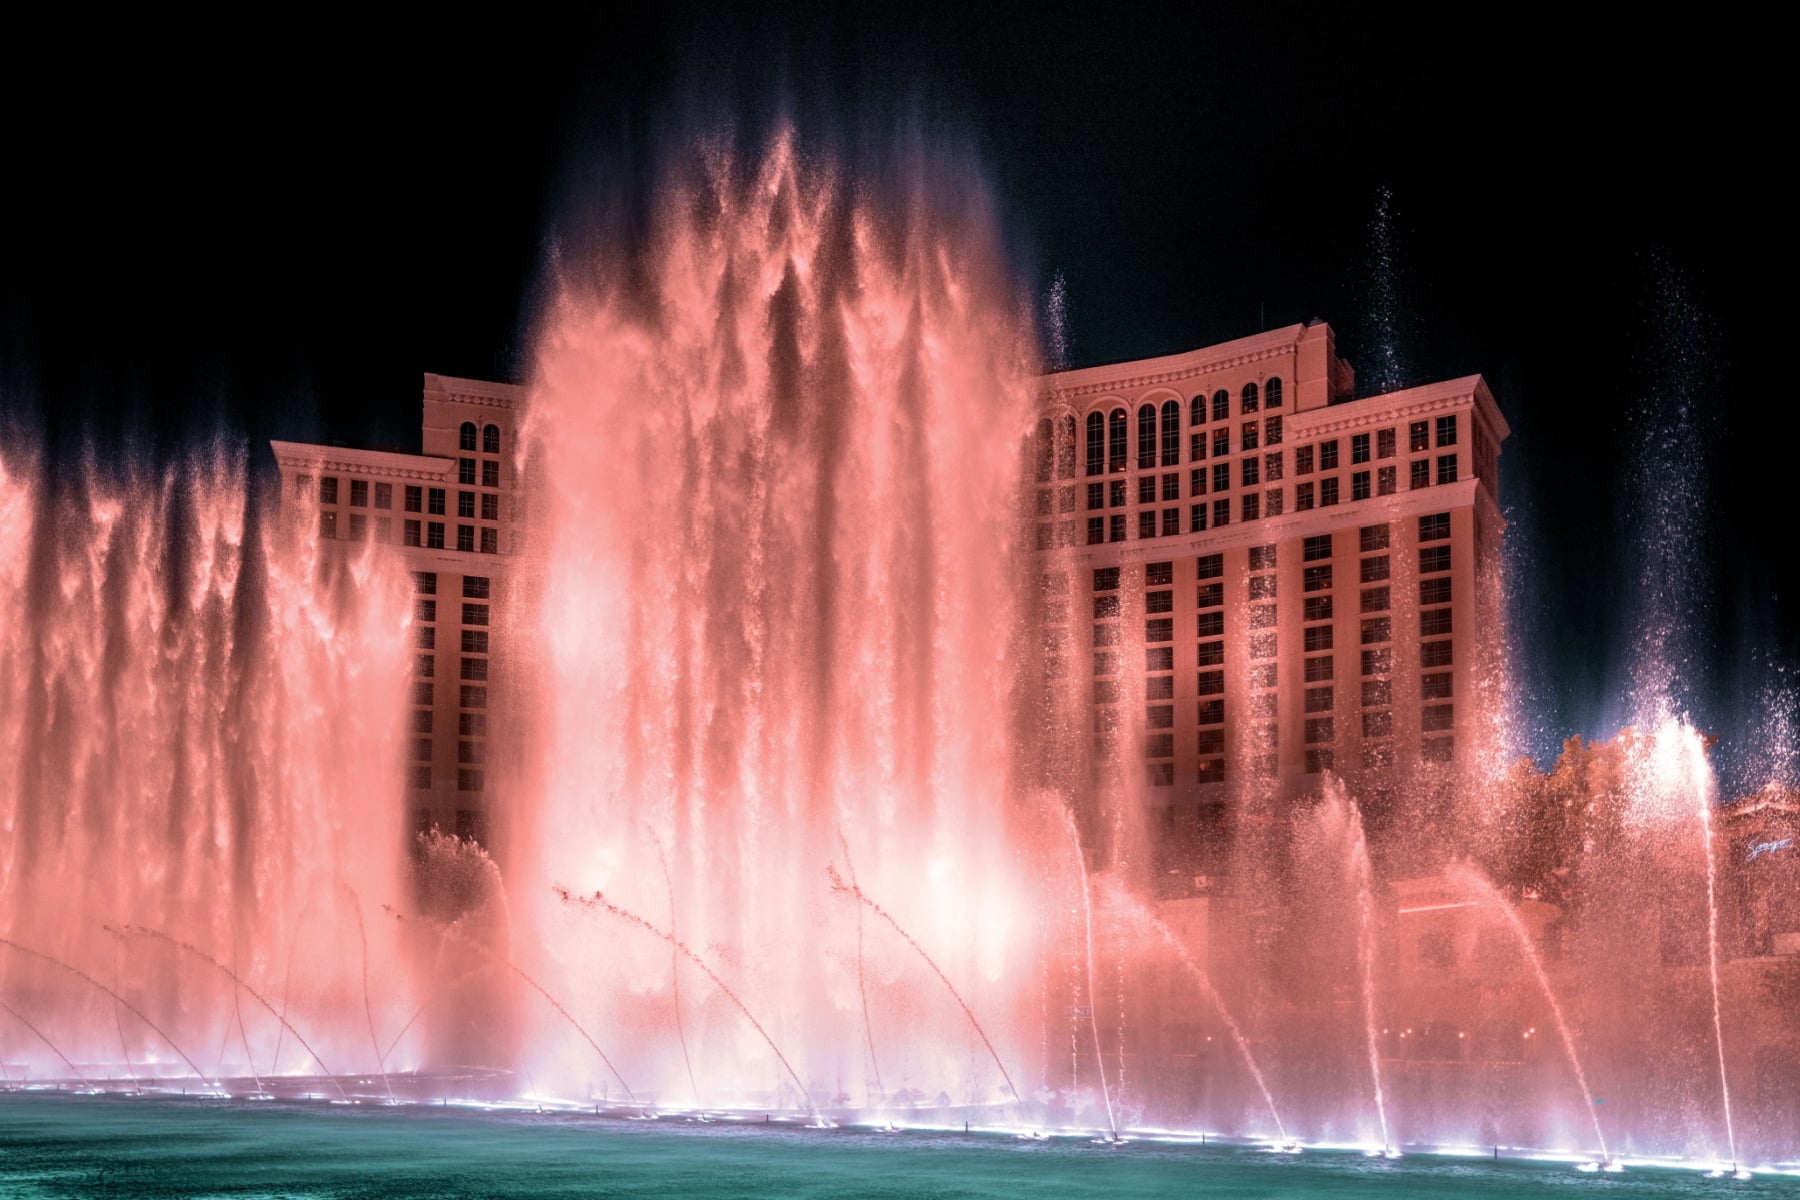 Bellagio Fountains at night.